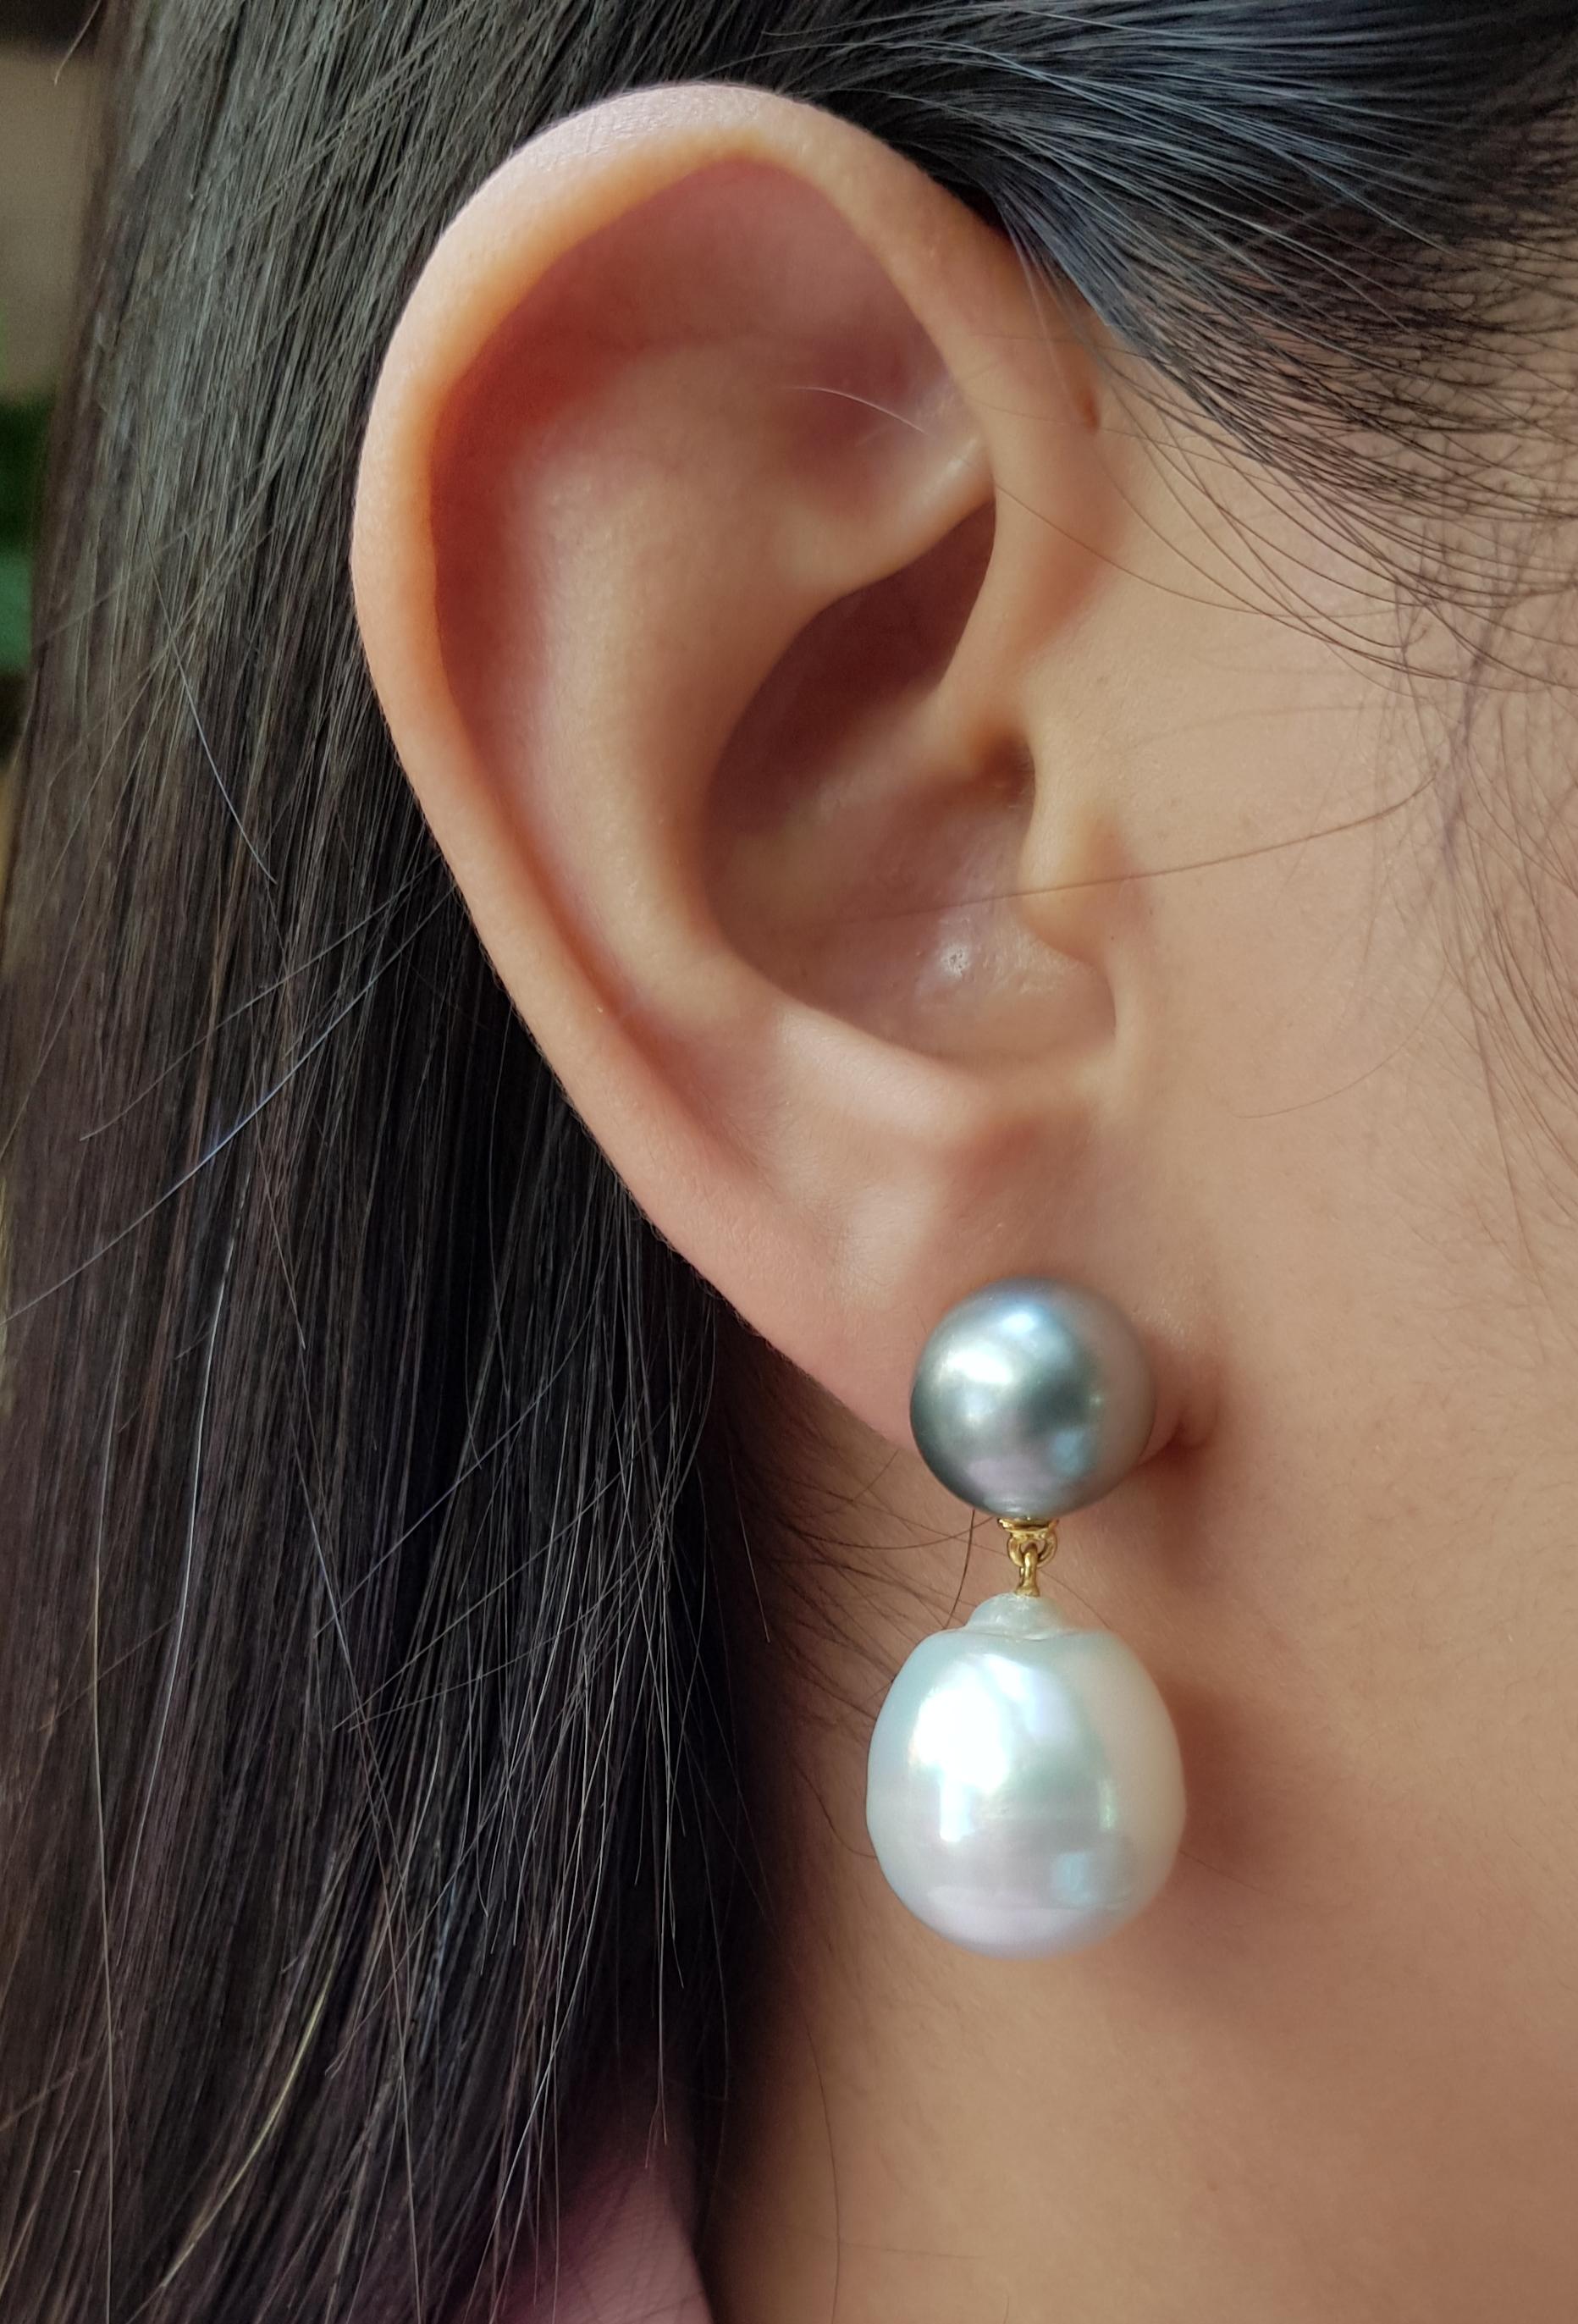 South Sea Pearl Earrings set in 18 Karat Gold Settings

Width: 1.4 cm
Length: 3.1 cm 

